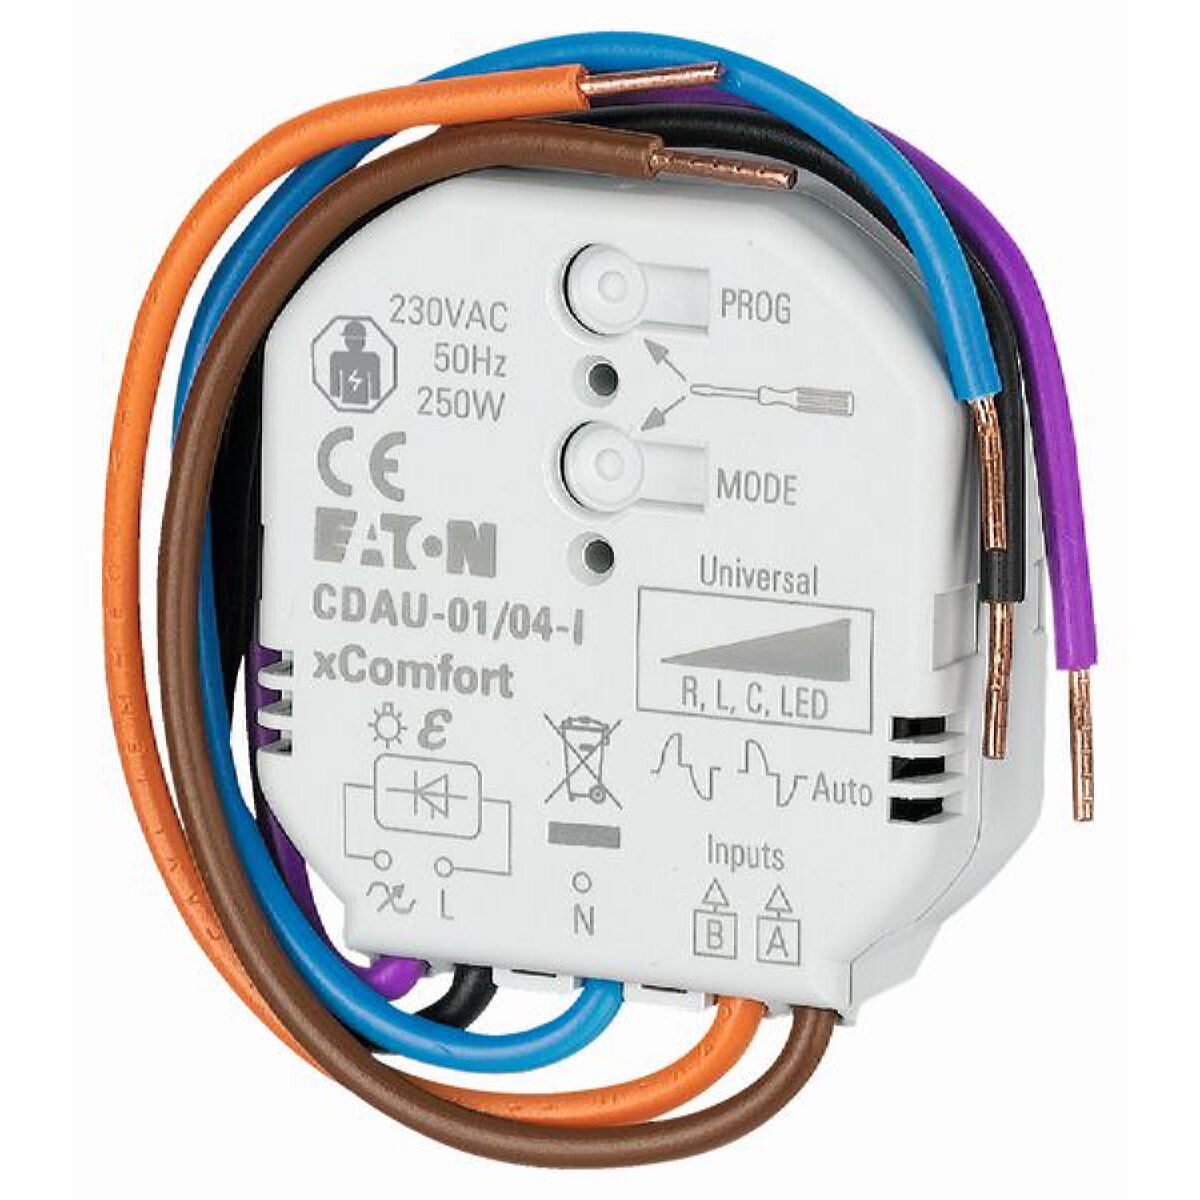 EATON Electric smart dimming actuator CDAU-01/04-I R/L/C/LED 0-250W